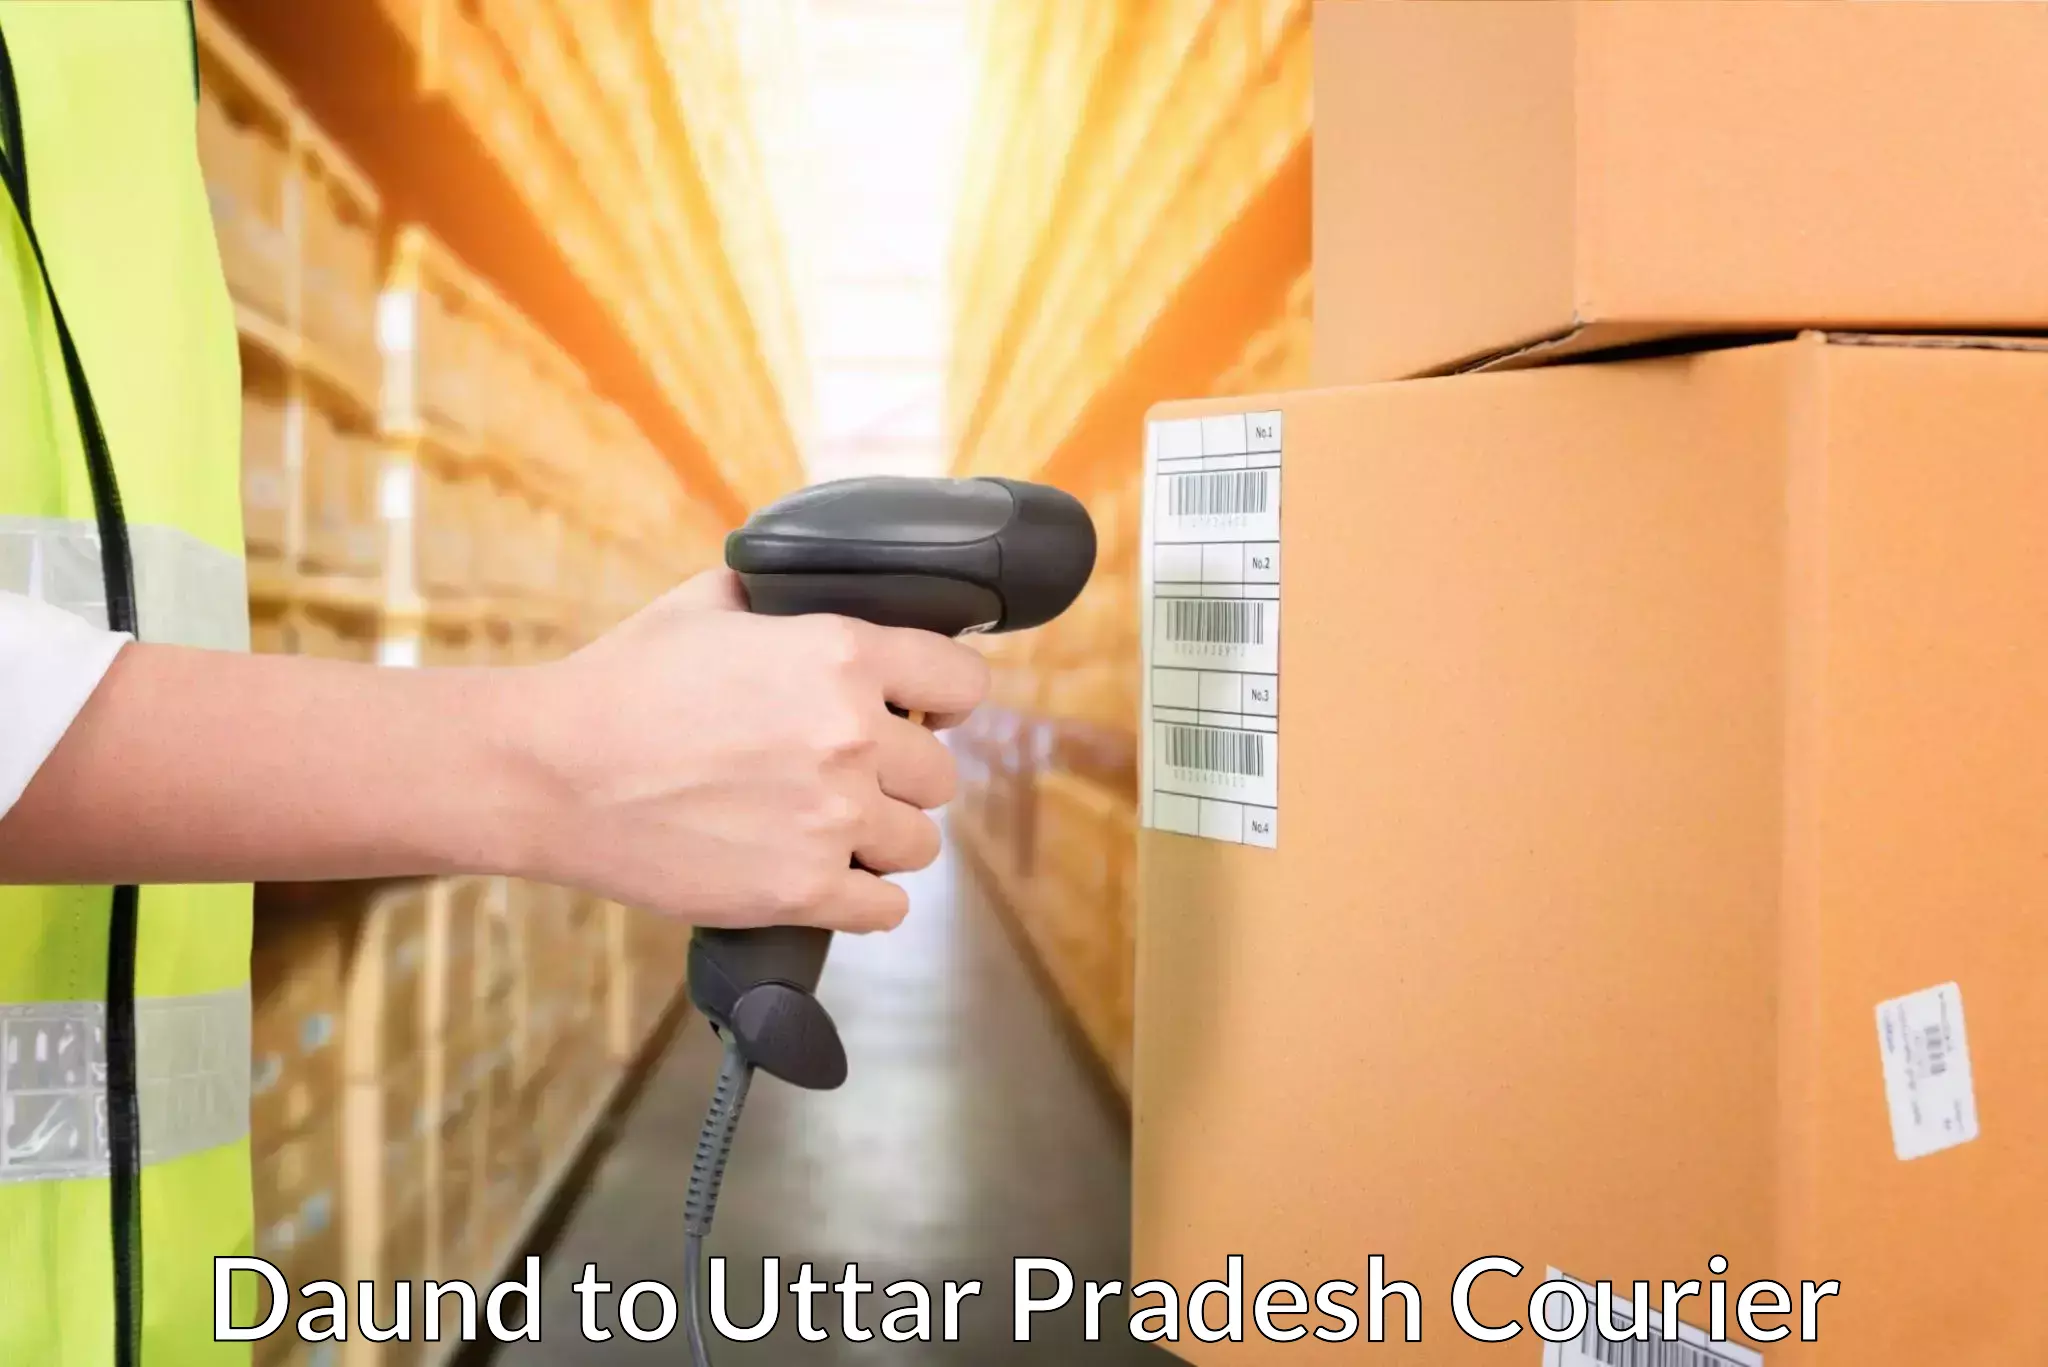 Modern courier technology Daund to Agra